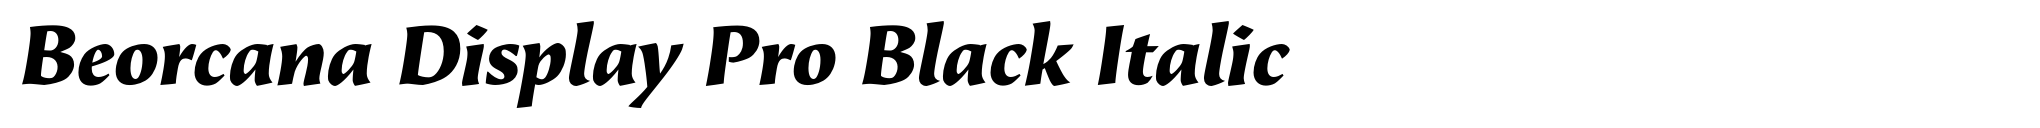 Beorcana Display Pro Black Italic image